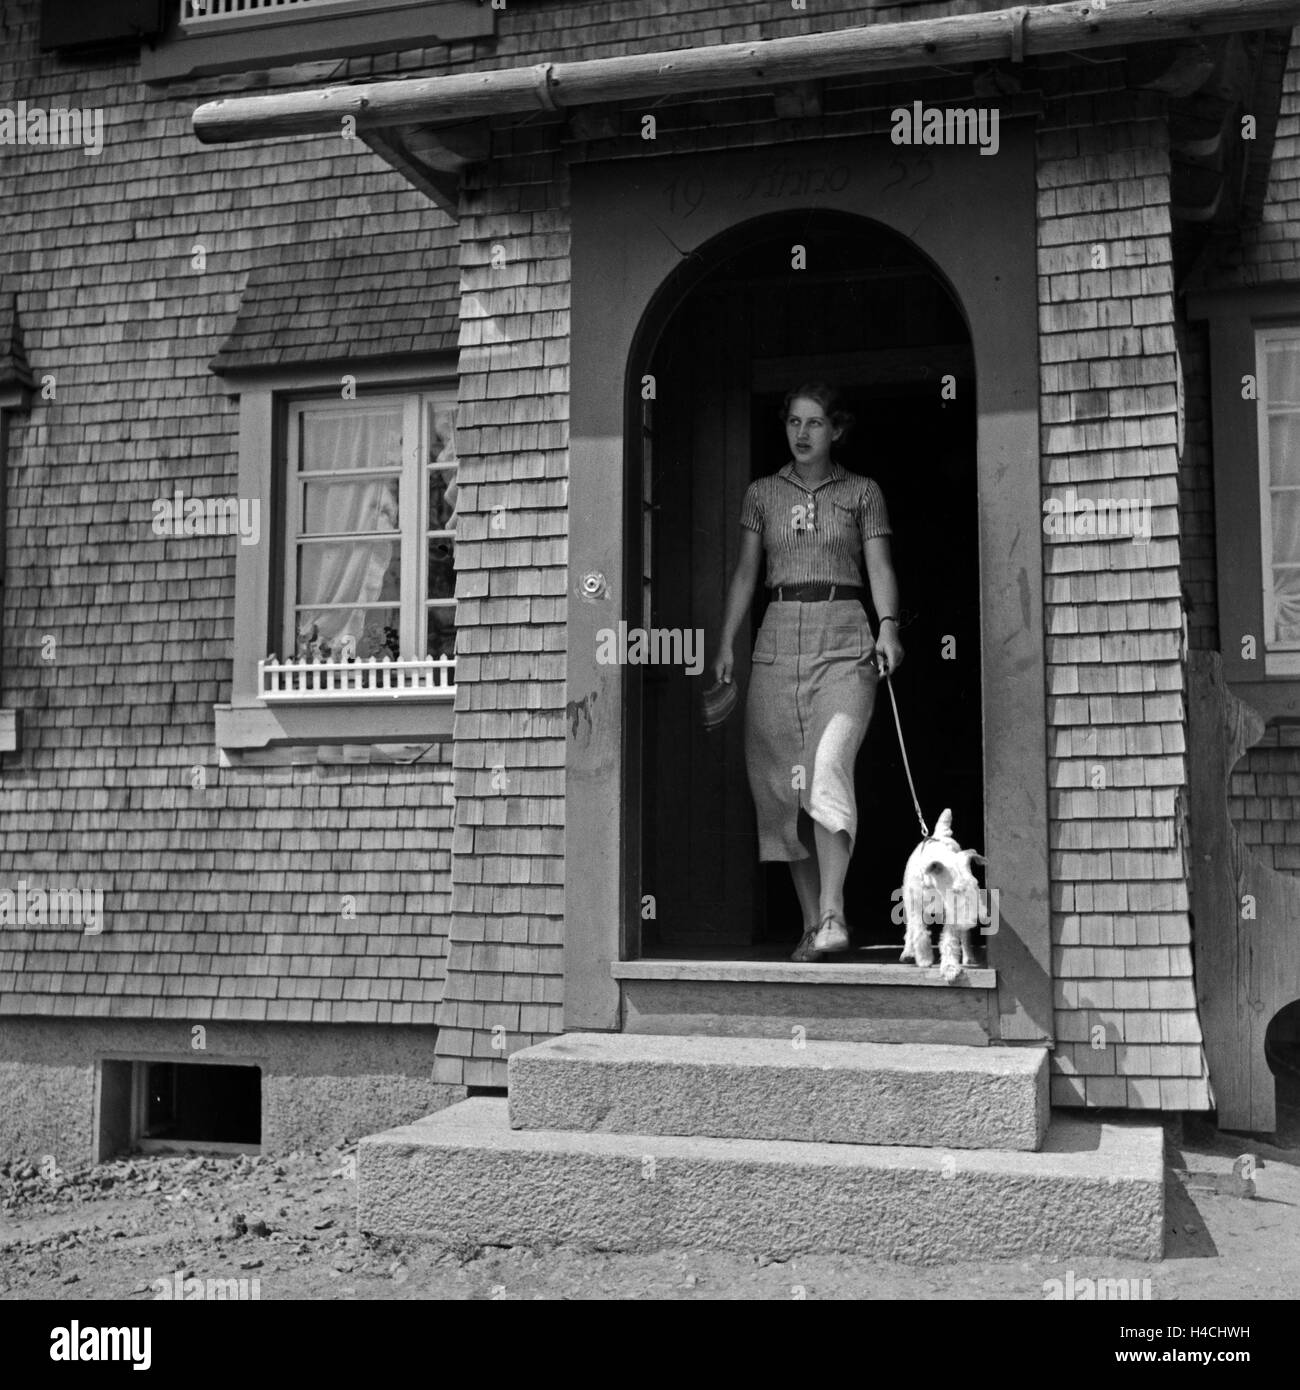 Eine junge Frau mit einem verläßt Foxterrier das Haus, Deutschland 1930 er Jahre. Une jeune femme de quitter la maison avec un chiot fox terrier, Allemagne 1930. Banque D'Images